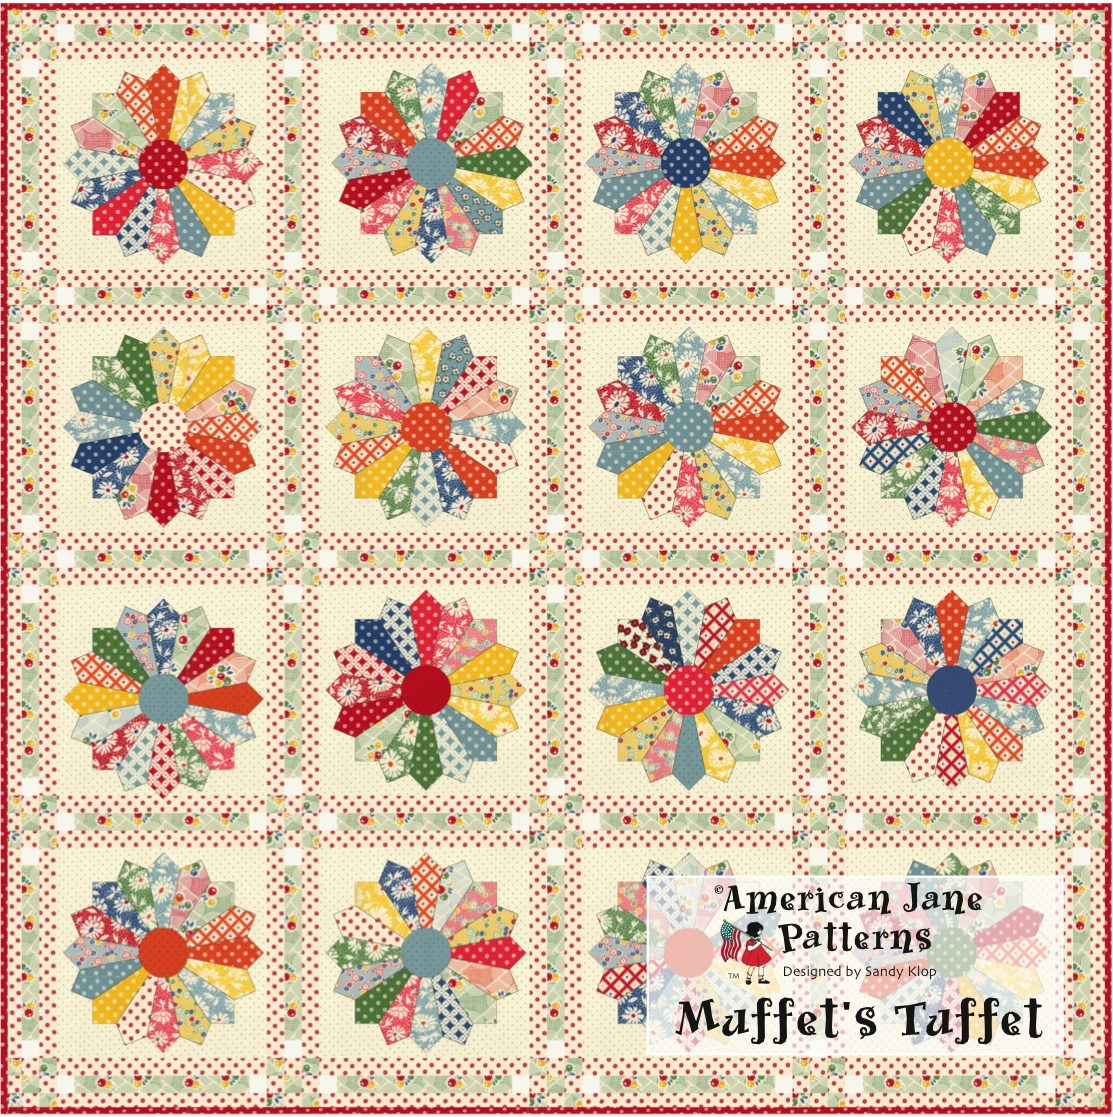 Muffet’s Tuffet Downloadable Pattern by American Jane Patterns